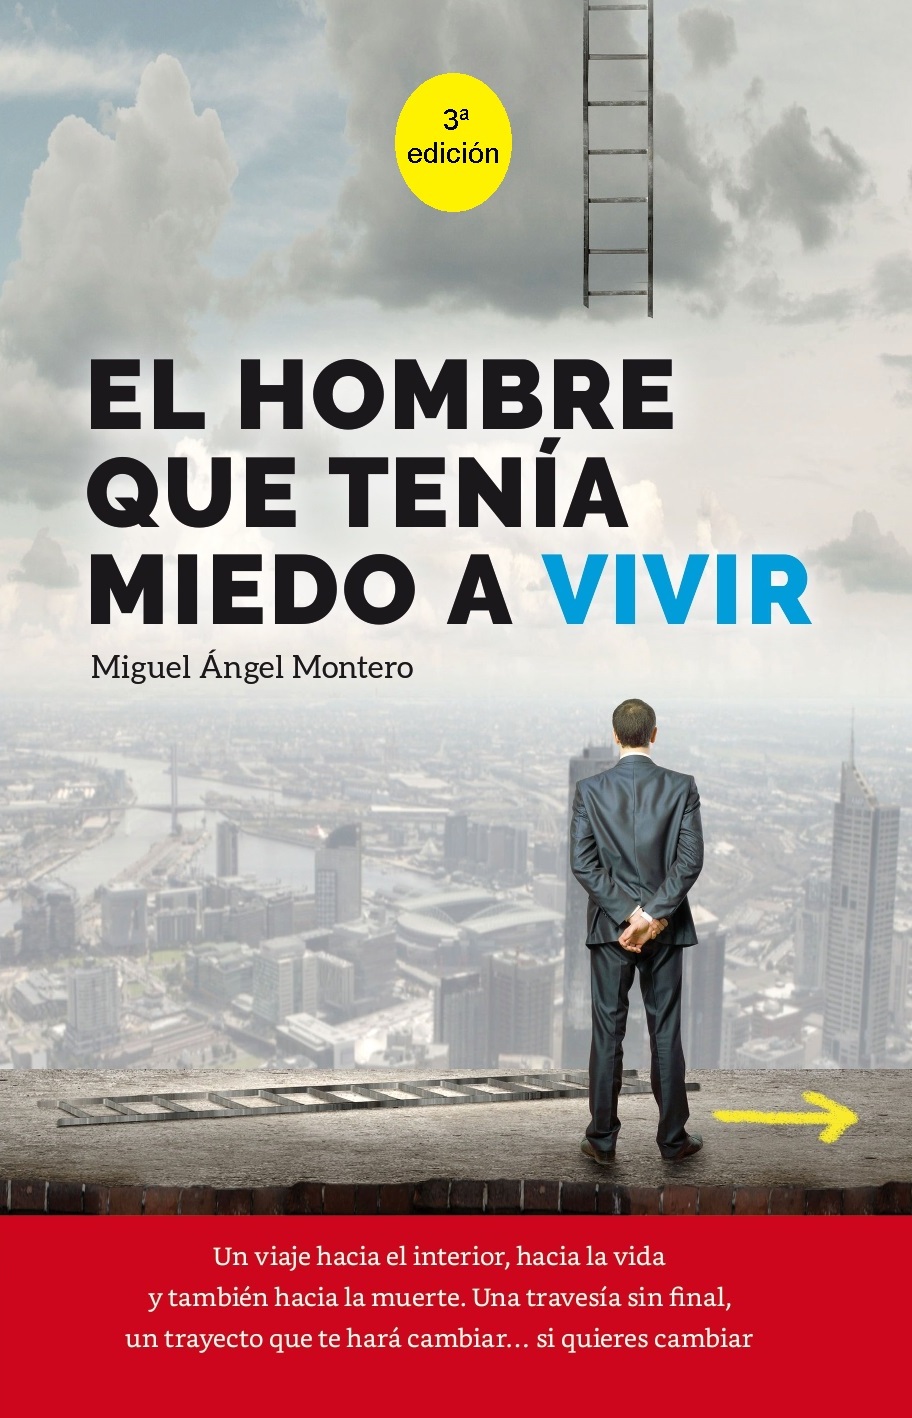 Miguel angel montero